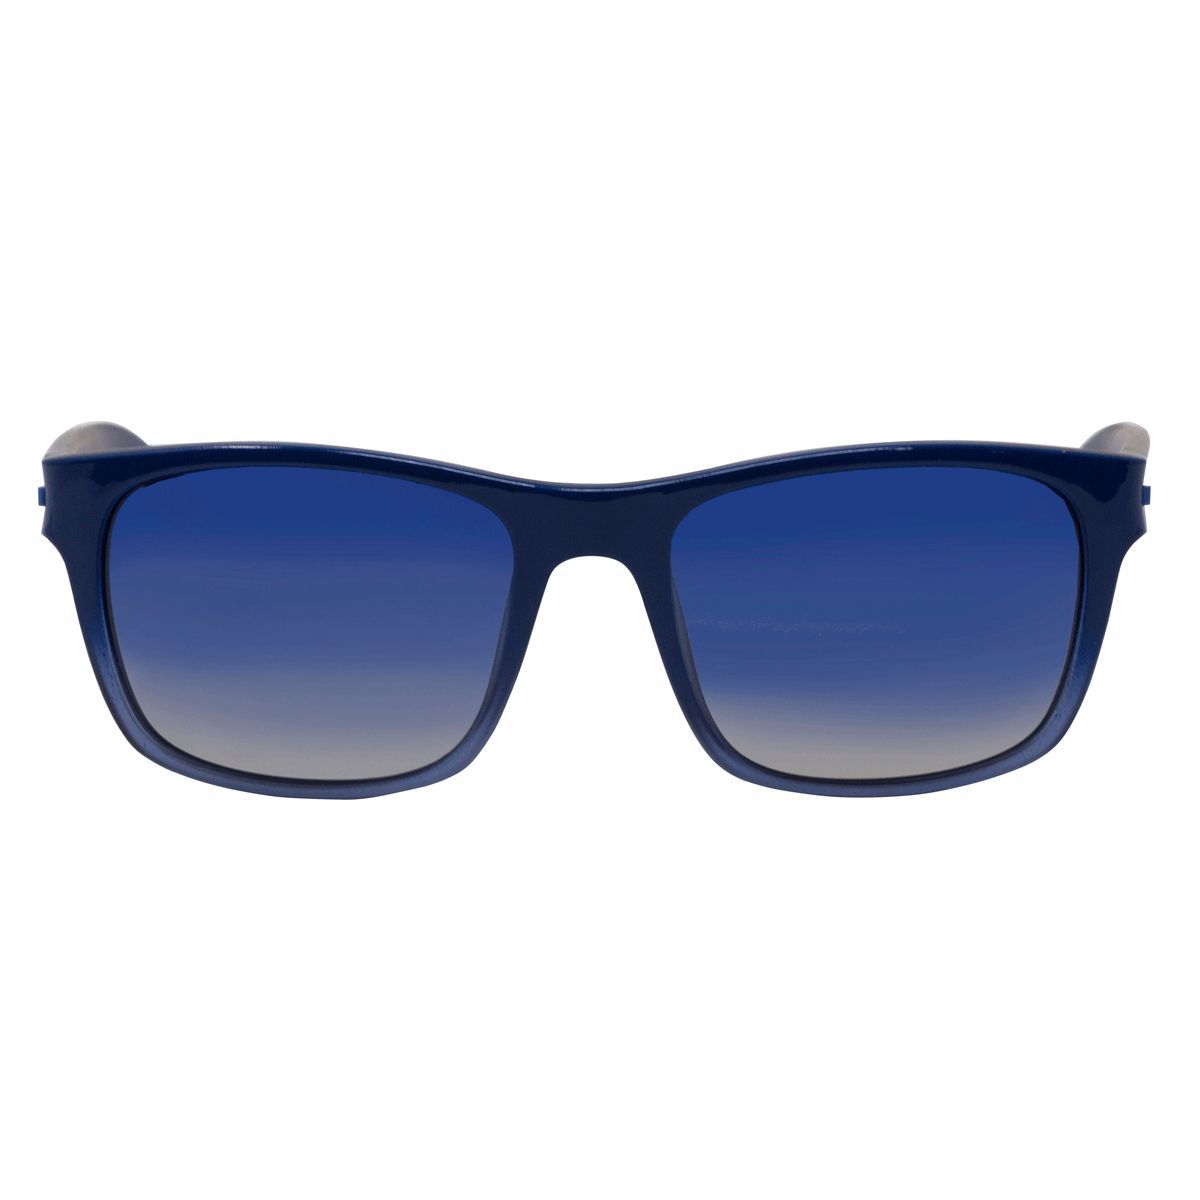 Enrico Blue Polycarbonate Wayfarer Blueberry Men's Sunglasses